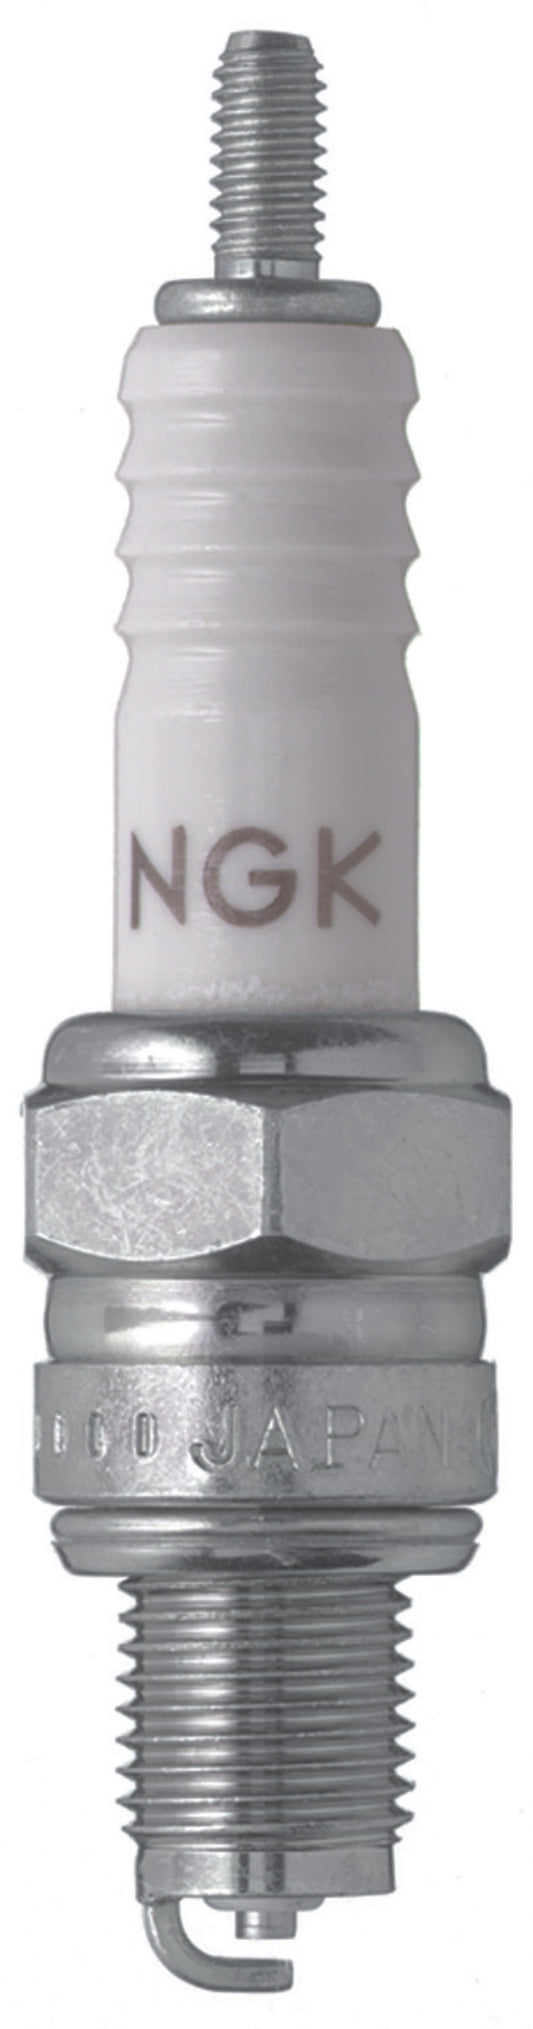 NGK Standard Spark Plug Box of 4 (C6HSA)